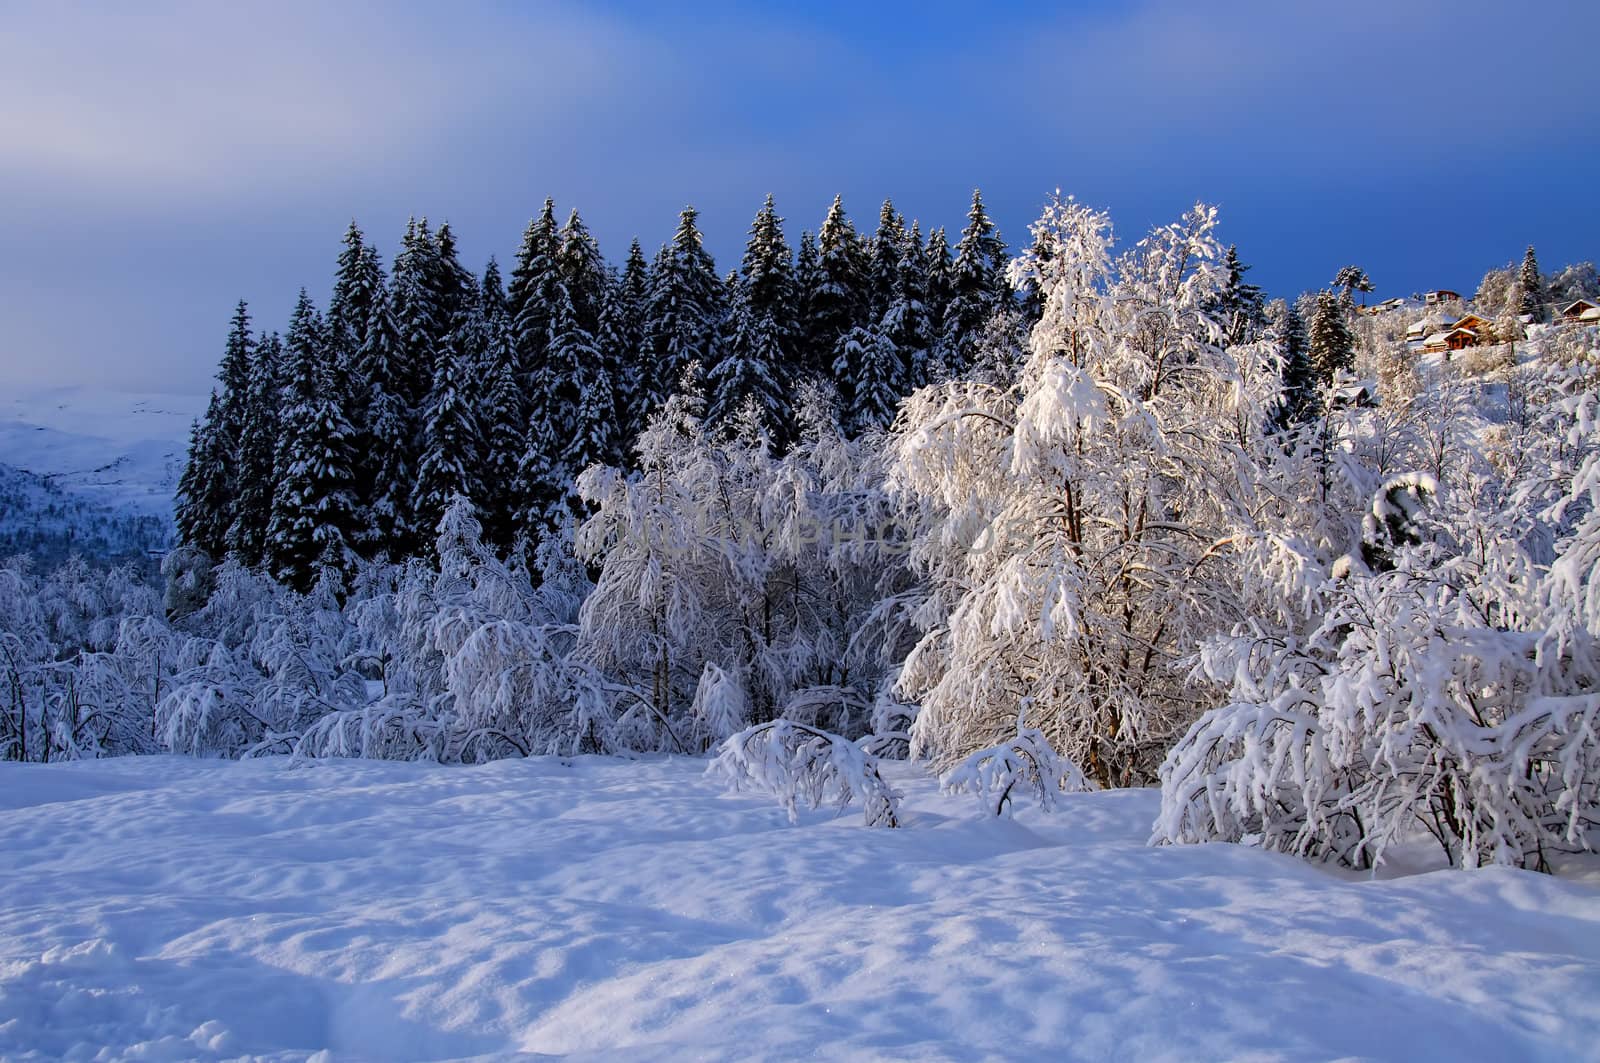 Winter wonderland by GryT